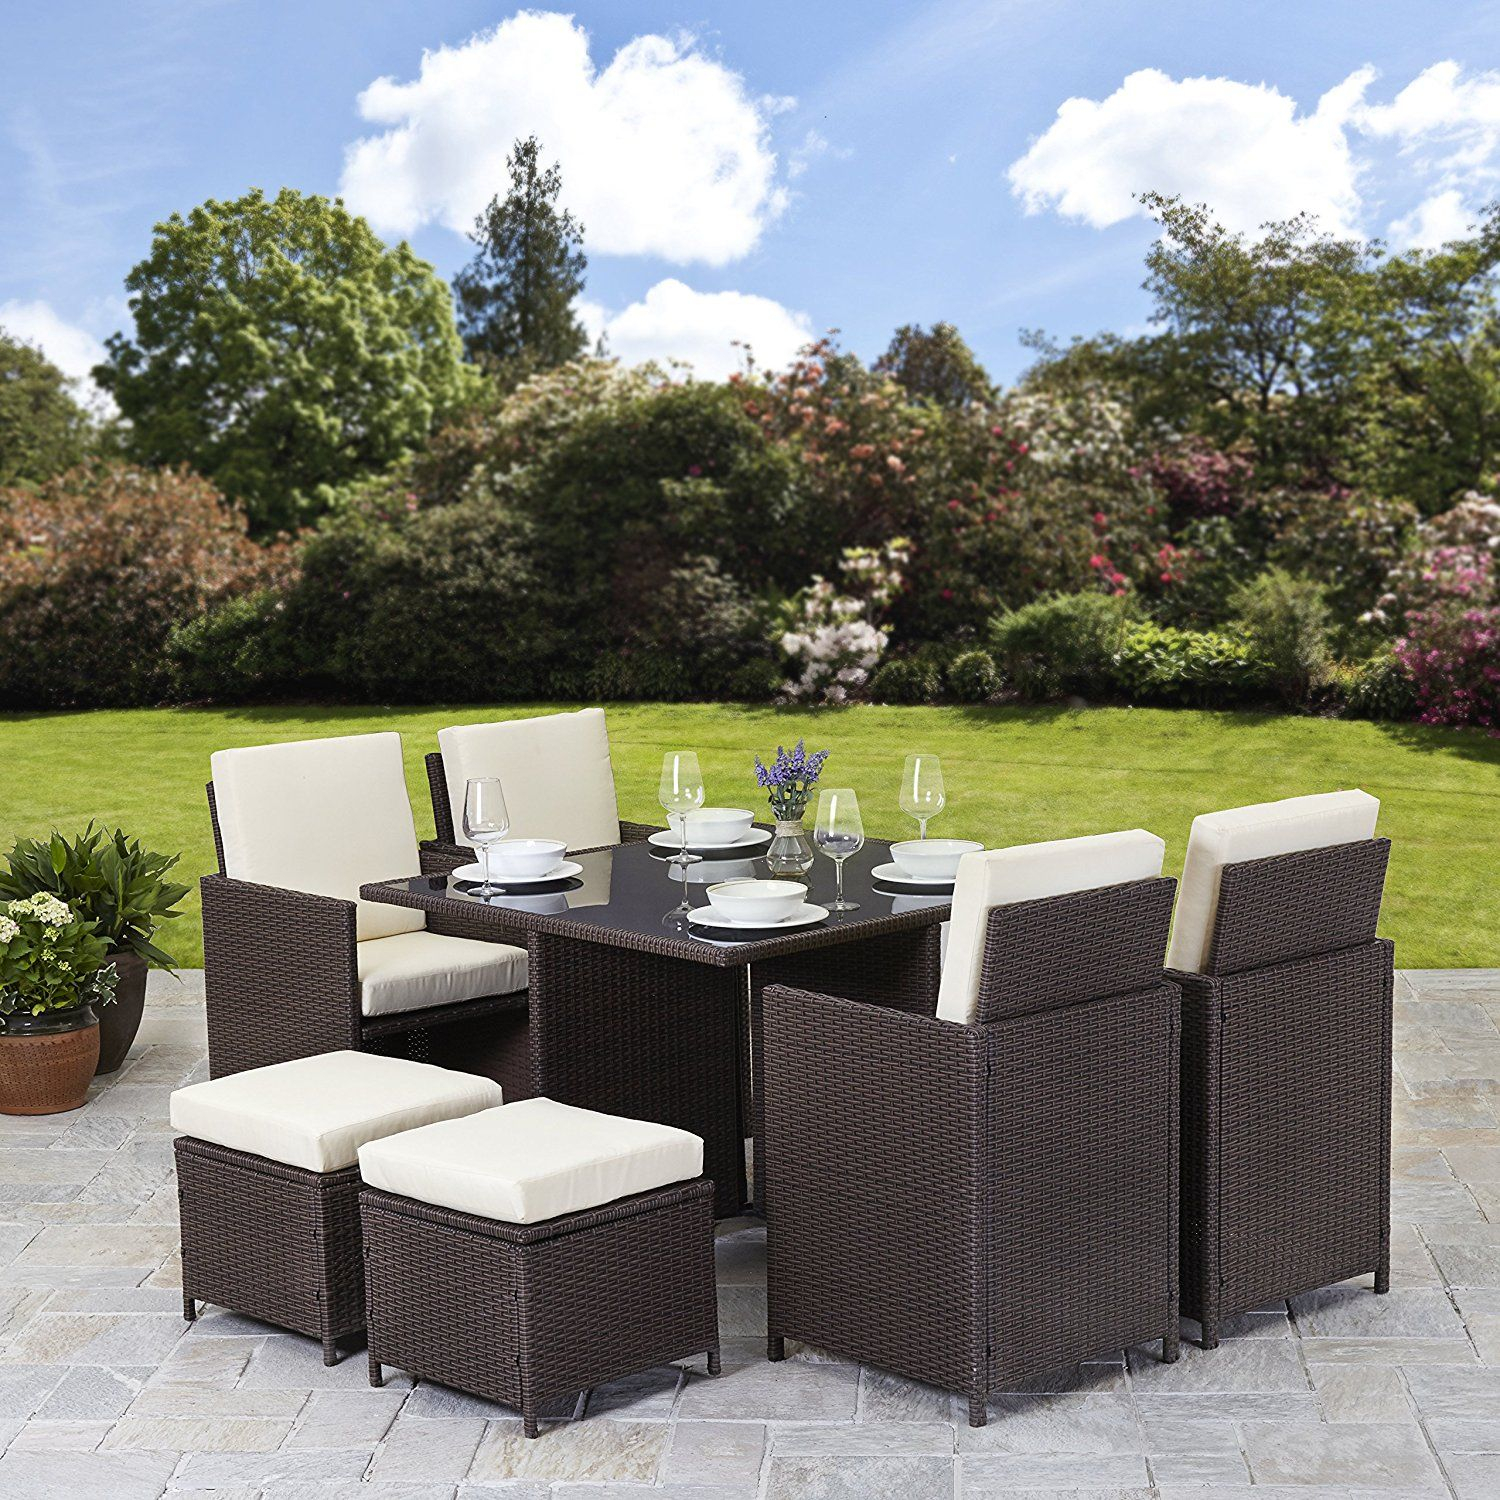 Rattan Cube Garden Furniture Set 8 Seater Outdoor Wicker in size 1500 X 1500